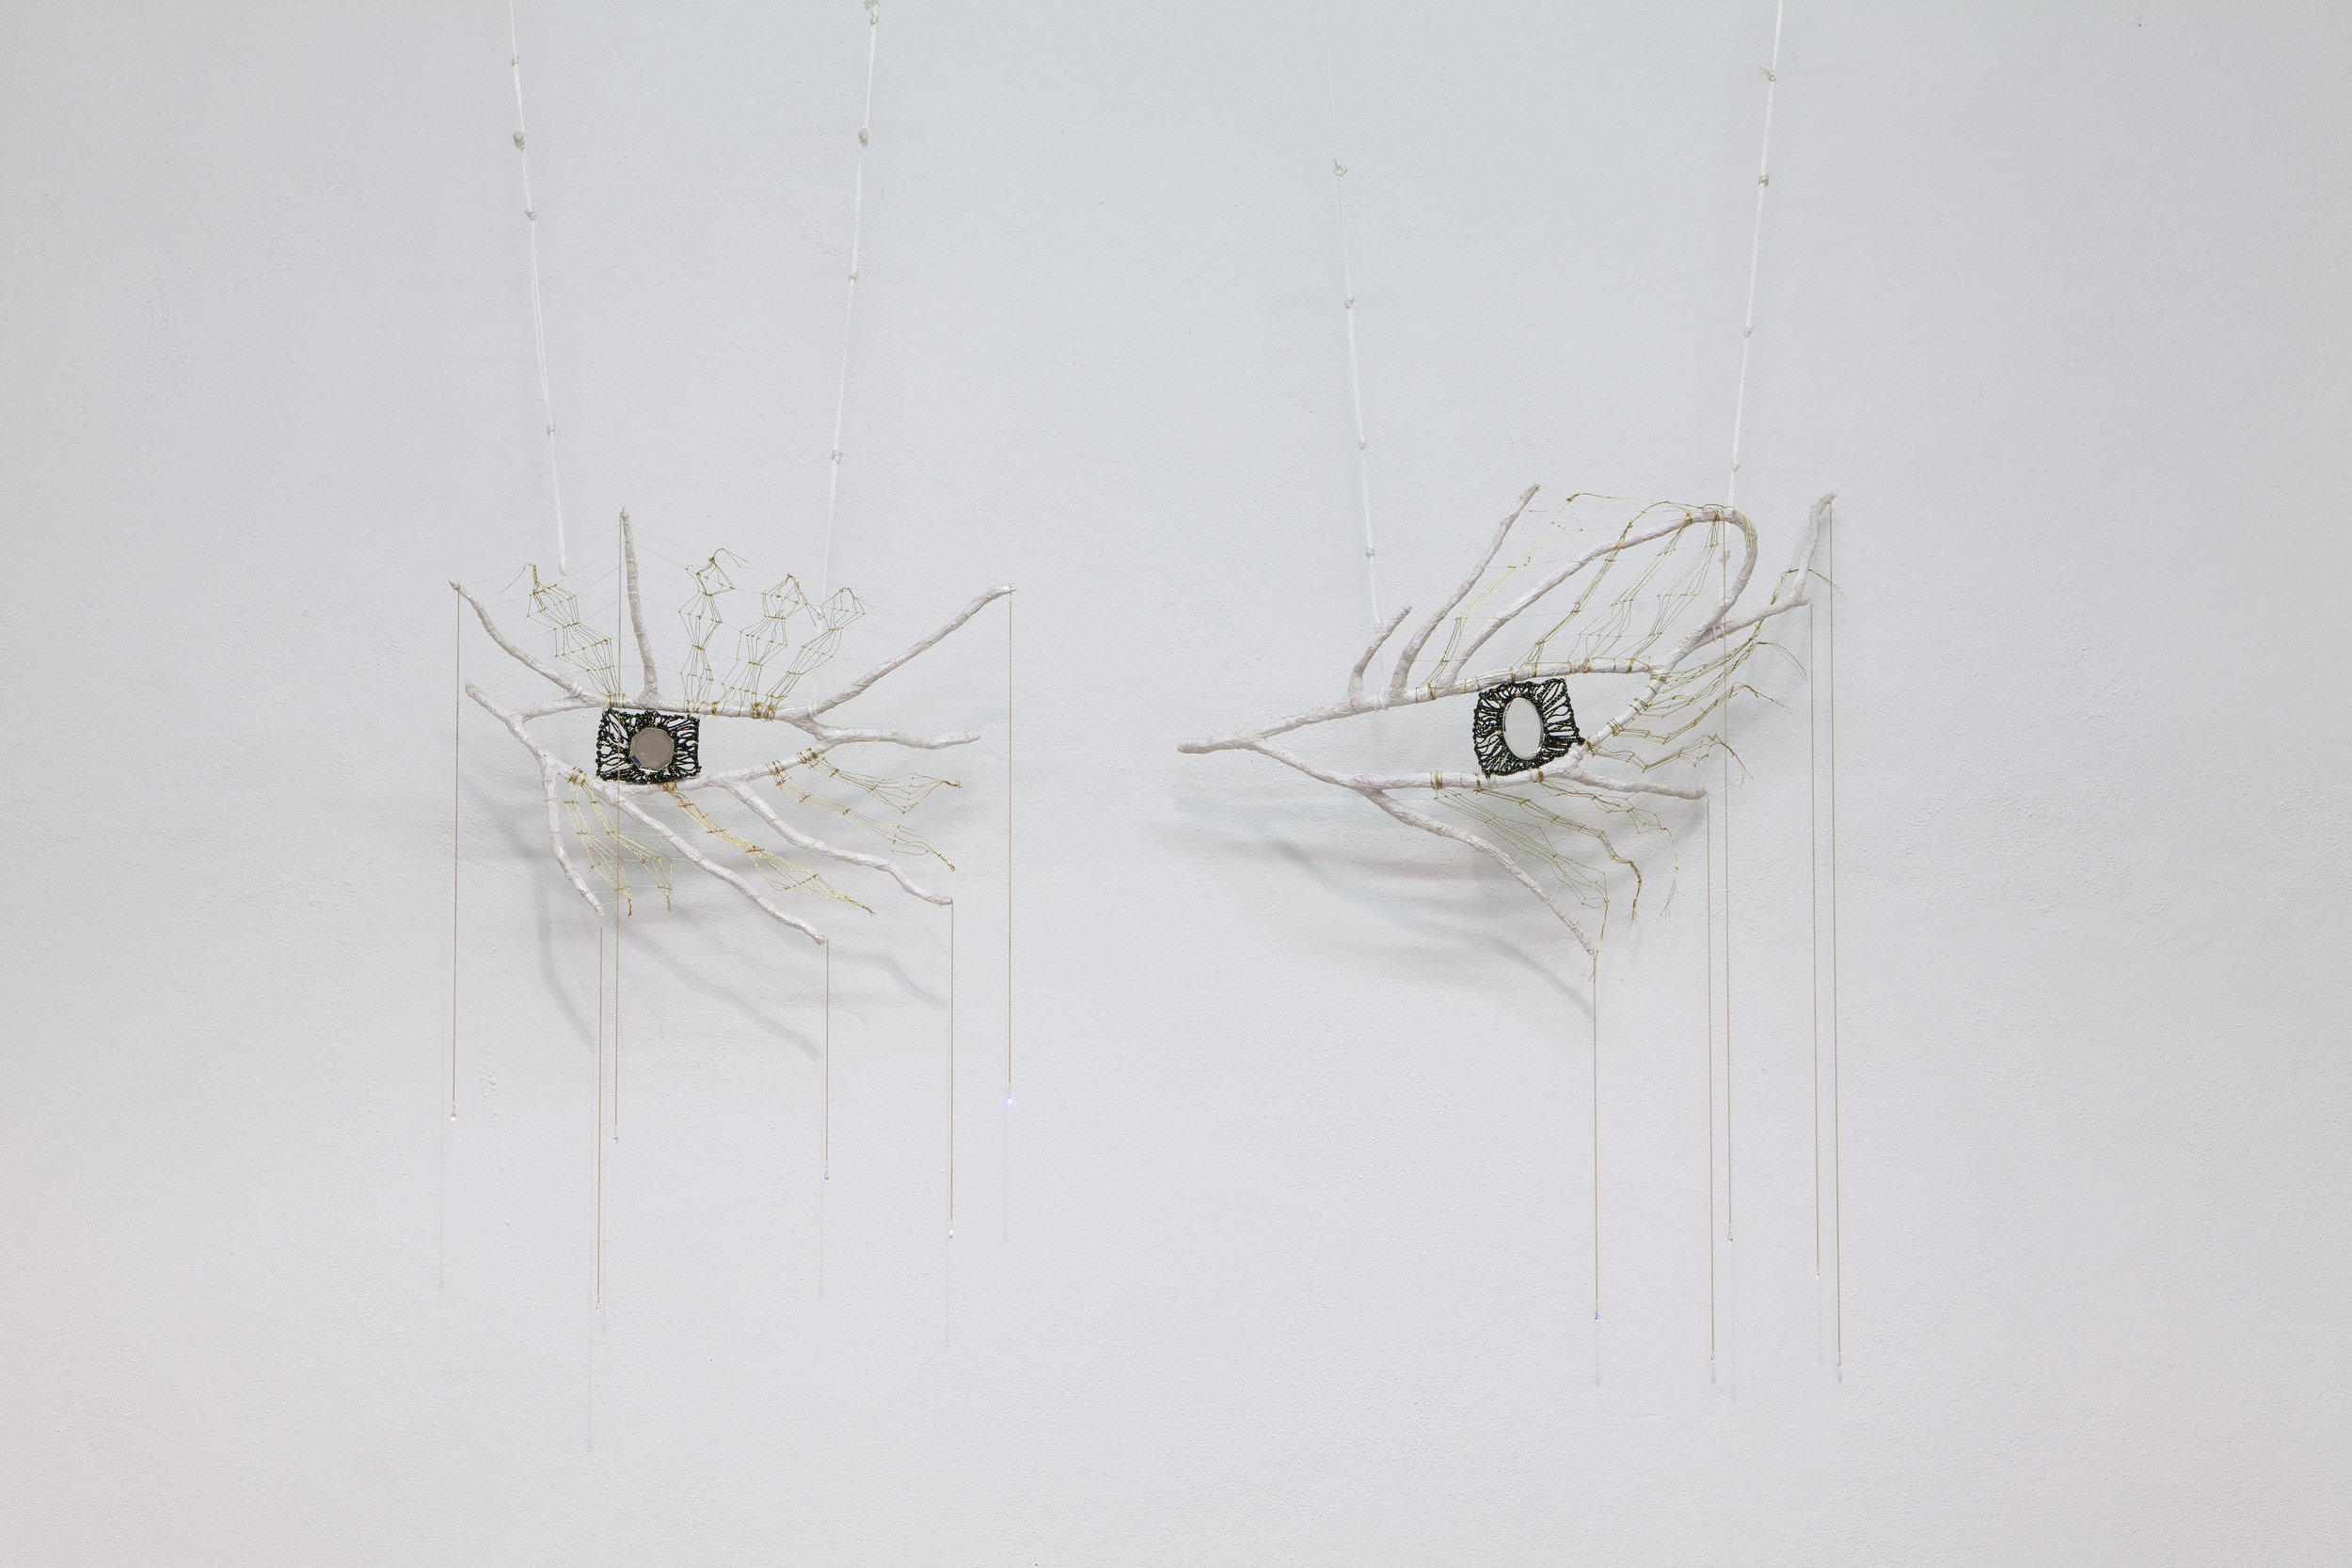   Mindy Rose Schwartz   Hamsa , 2018 Branches, cord, thread, mirrors, crystals, chain 40 x 64 x 10 inches 101.6 x 162.6 x 25.4 cm 